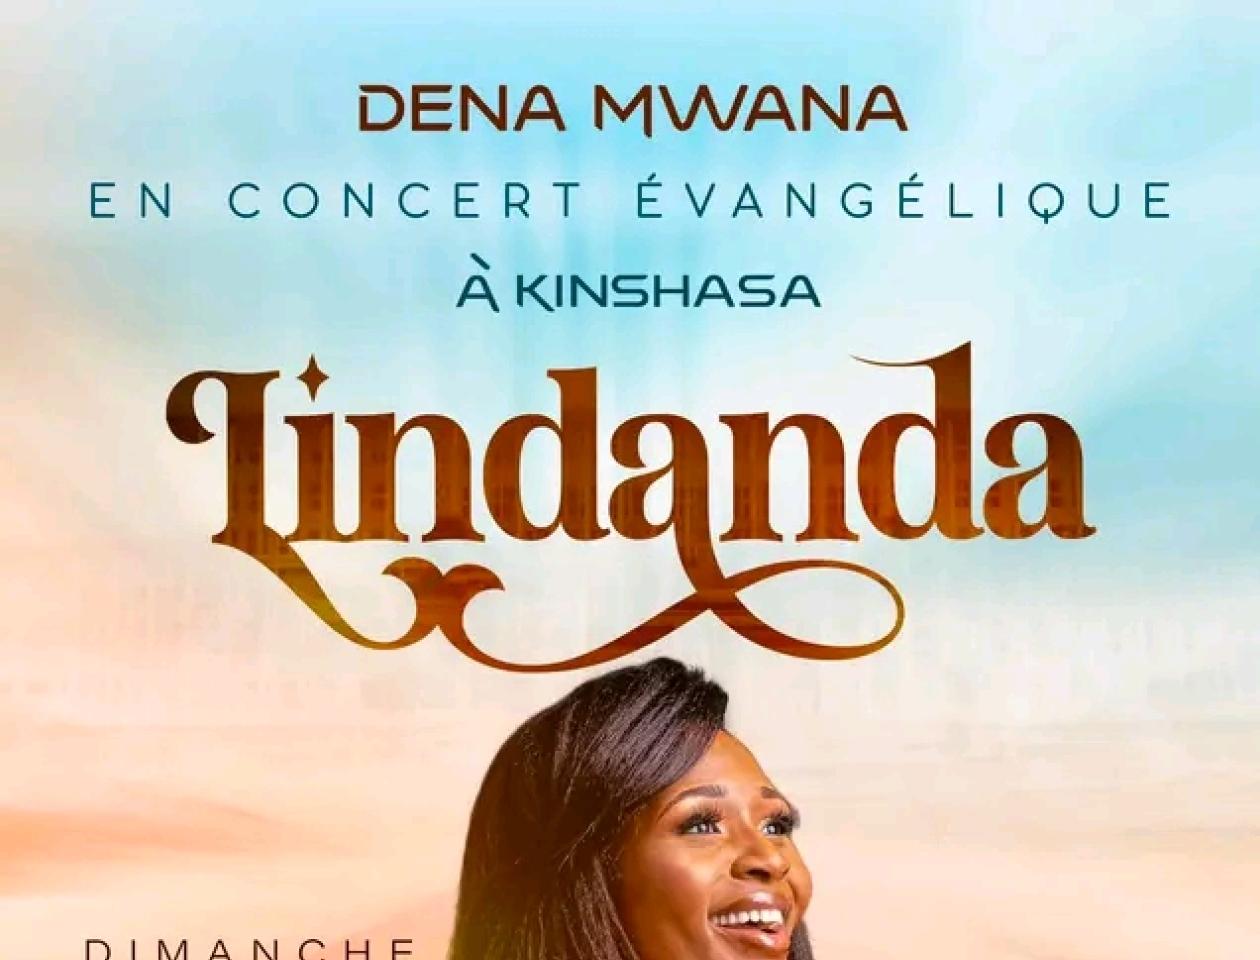 Affiche du concert Lindanda de Dena Mwana 